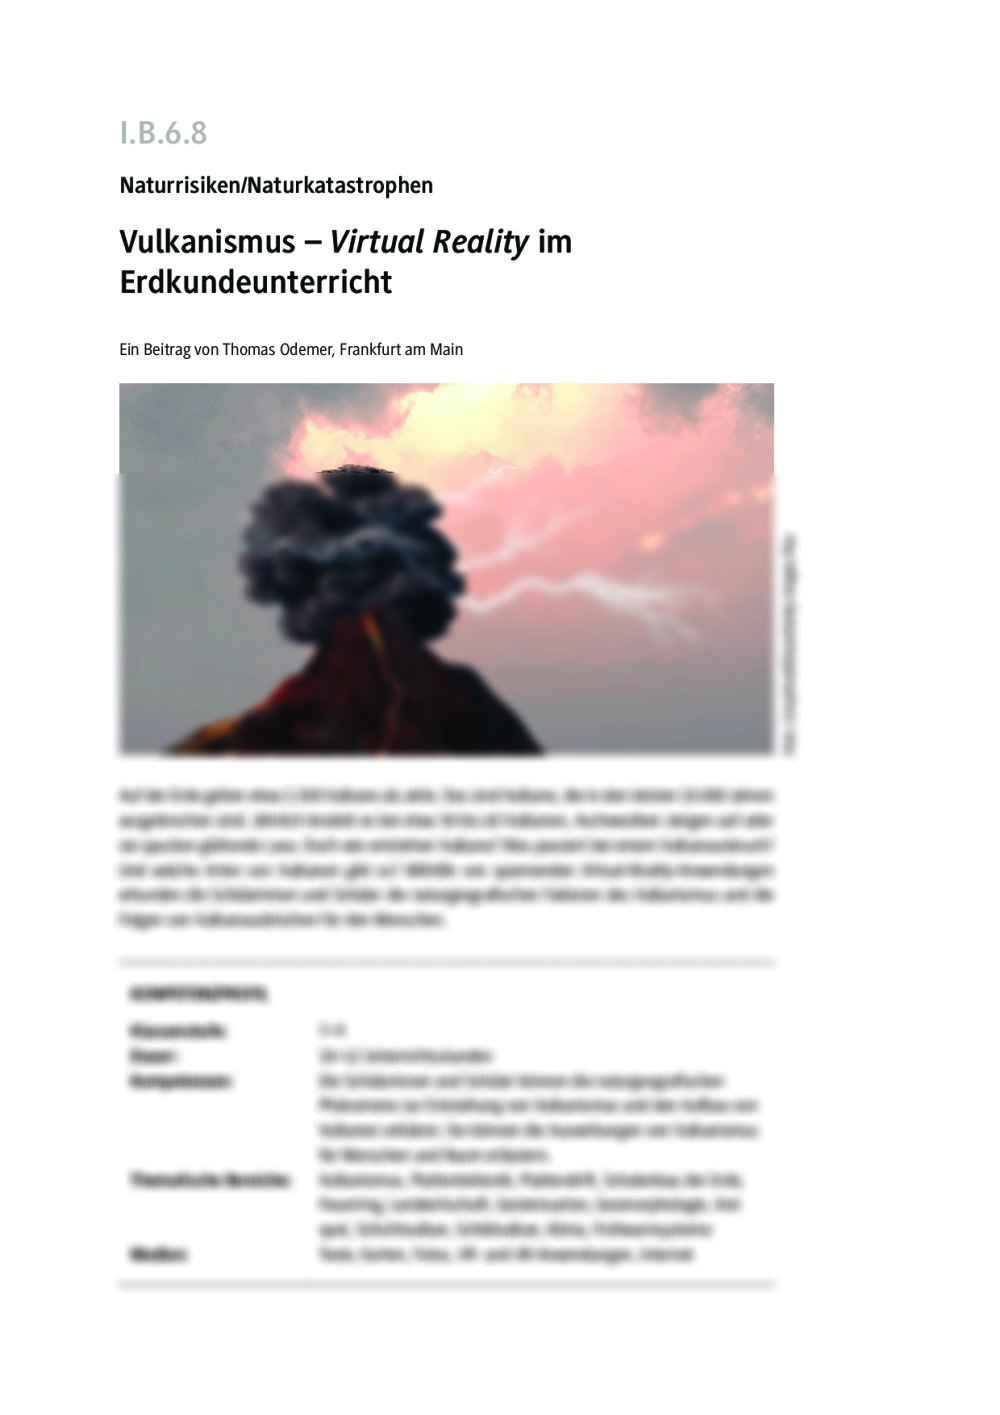 Vulkanismus mit Virtual Reality - Seite 1